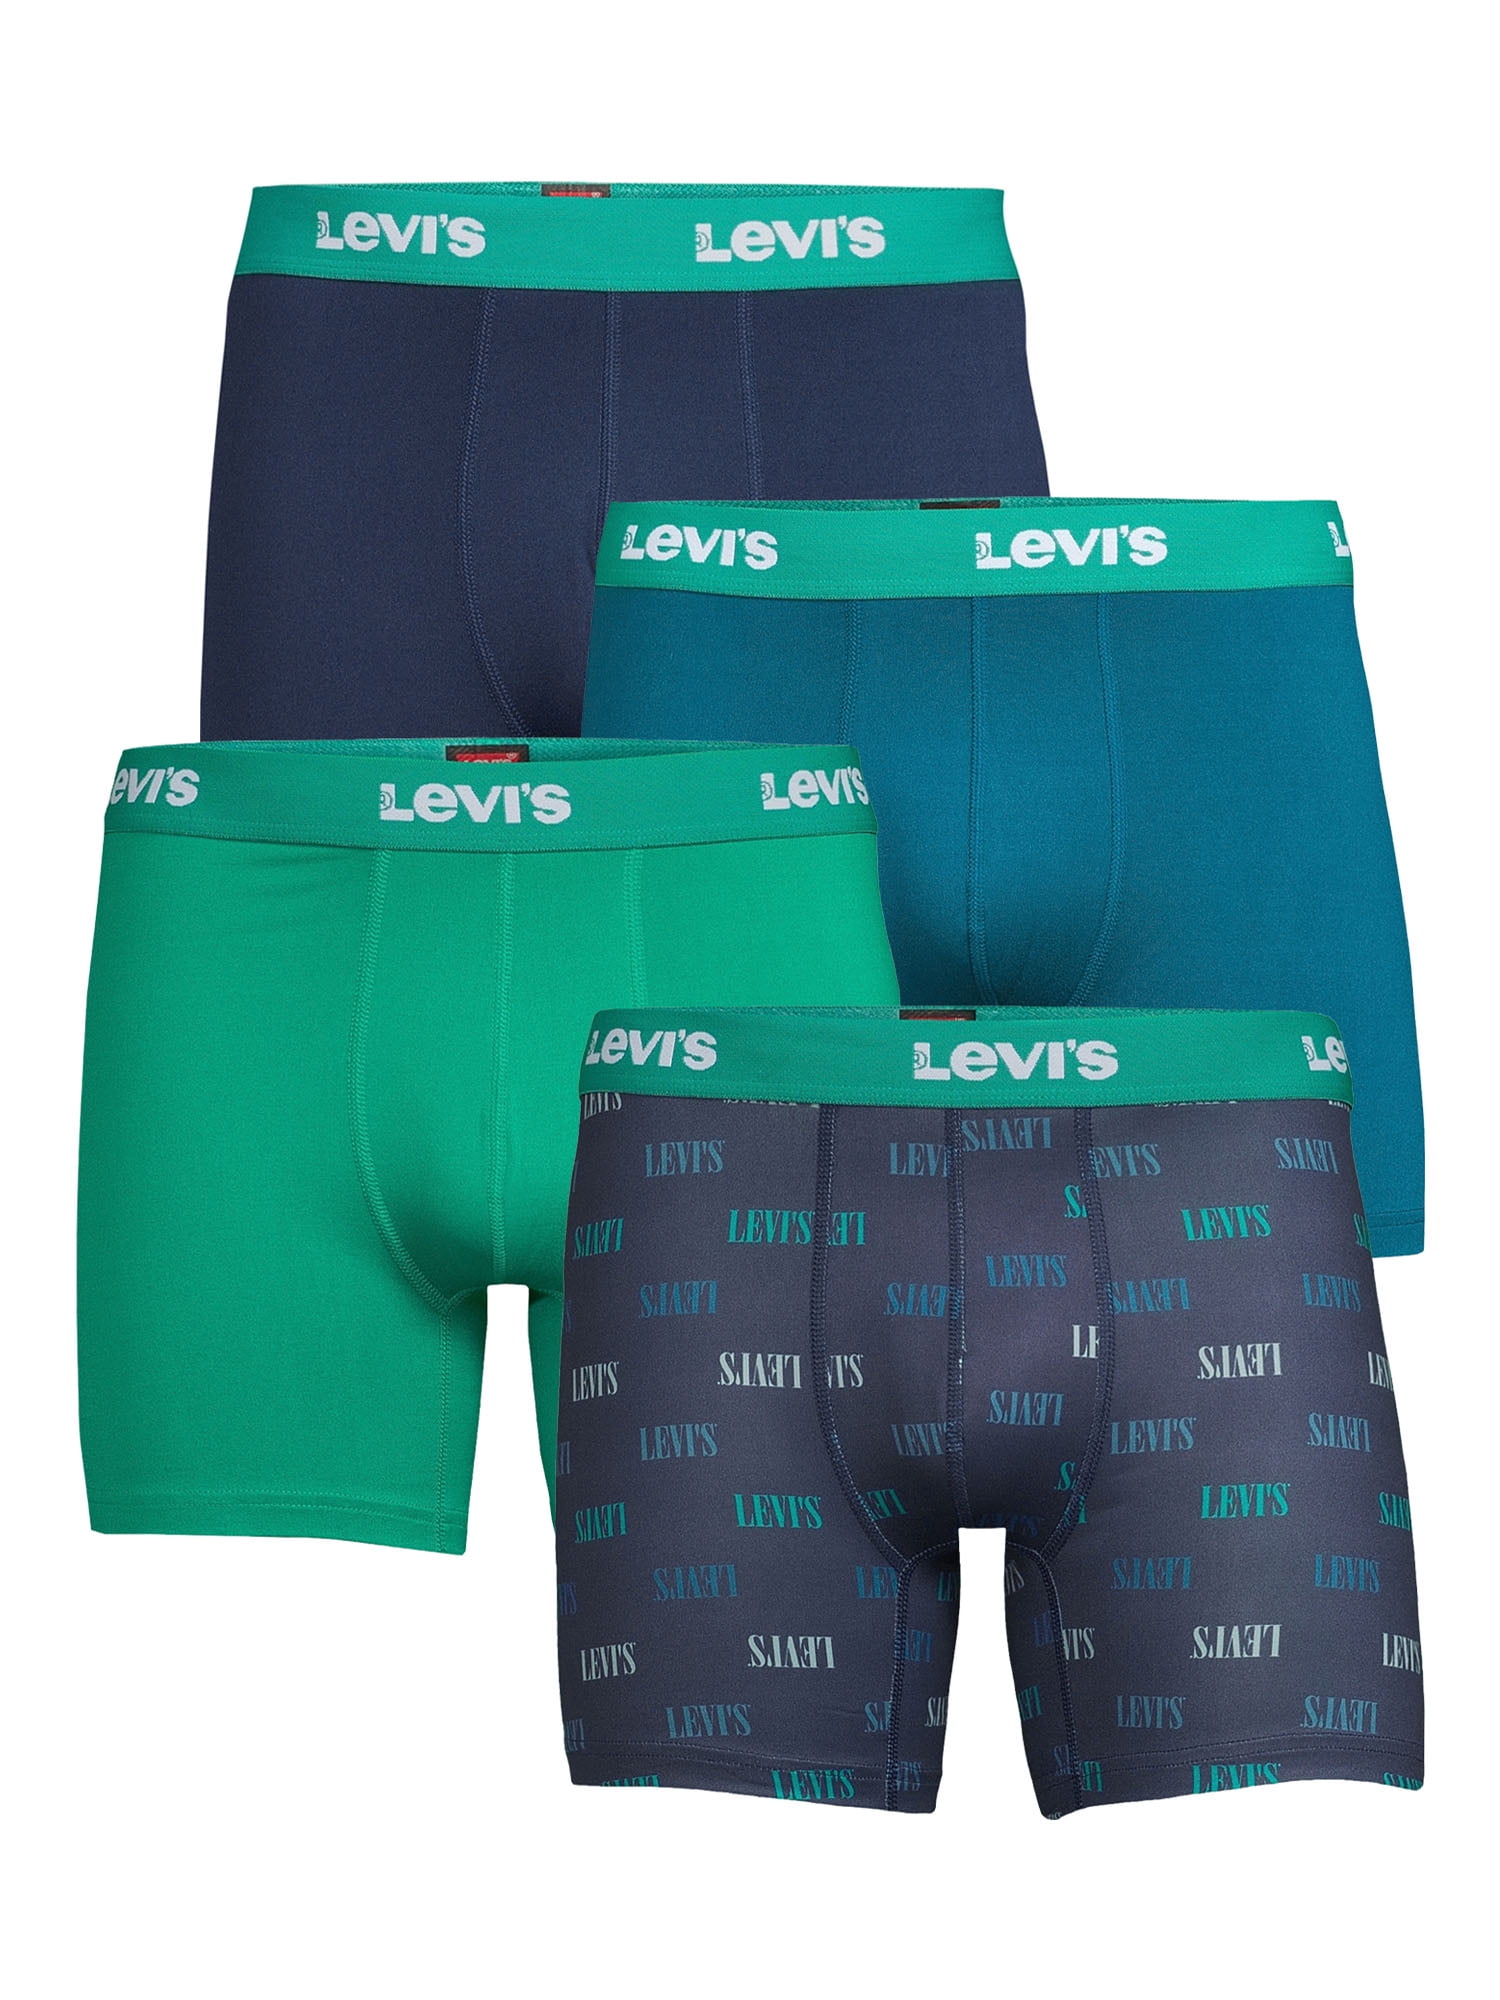 Mens Underwear LEVIS Mens Boxer Briefs Micro Boxer Brief for Men Pack of 4